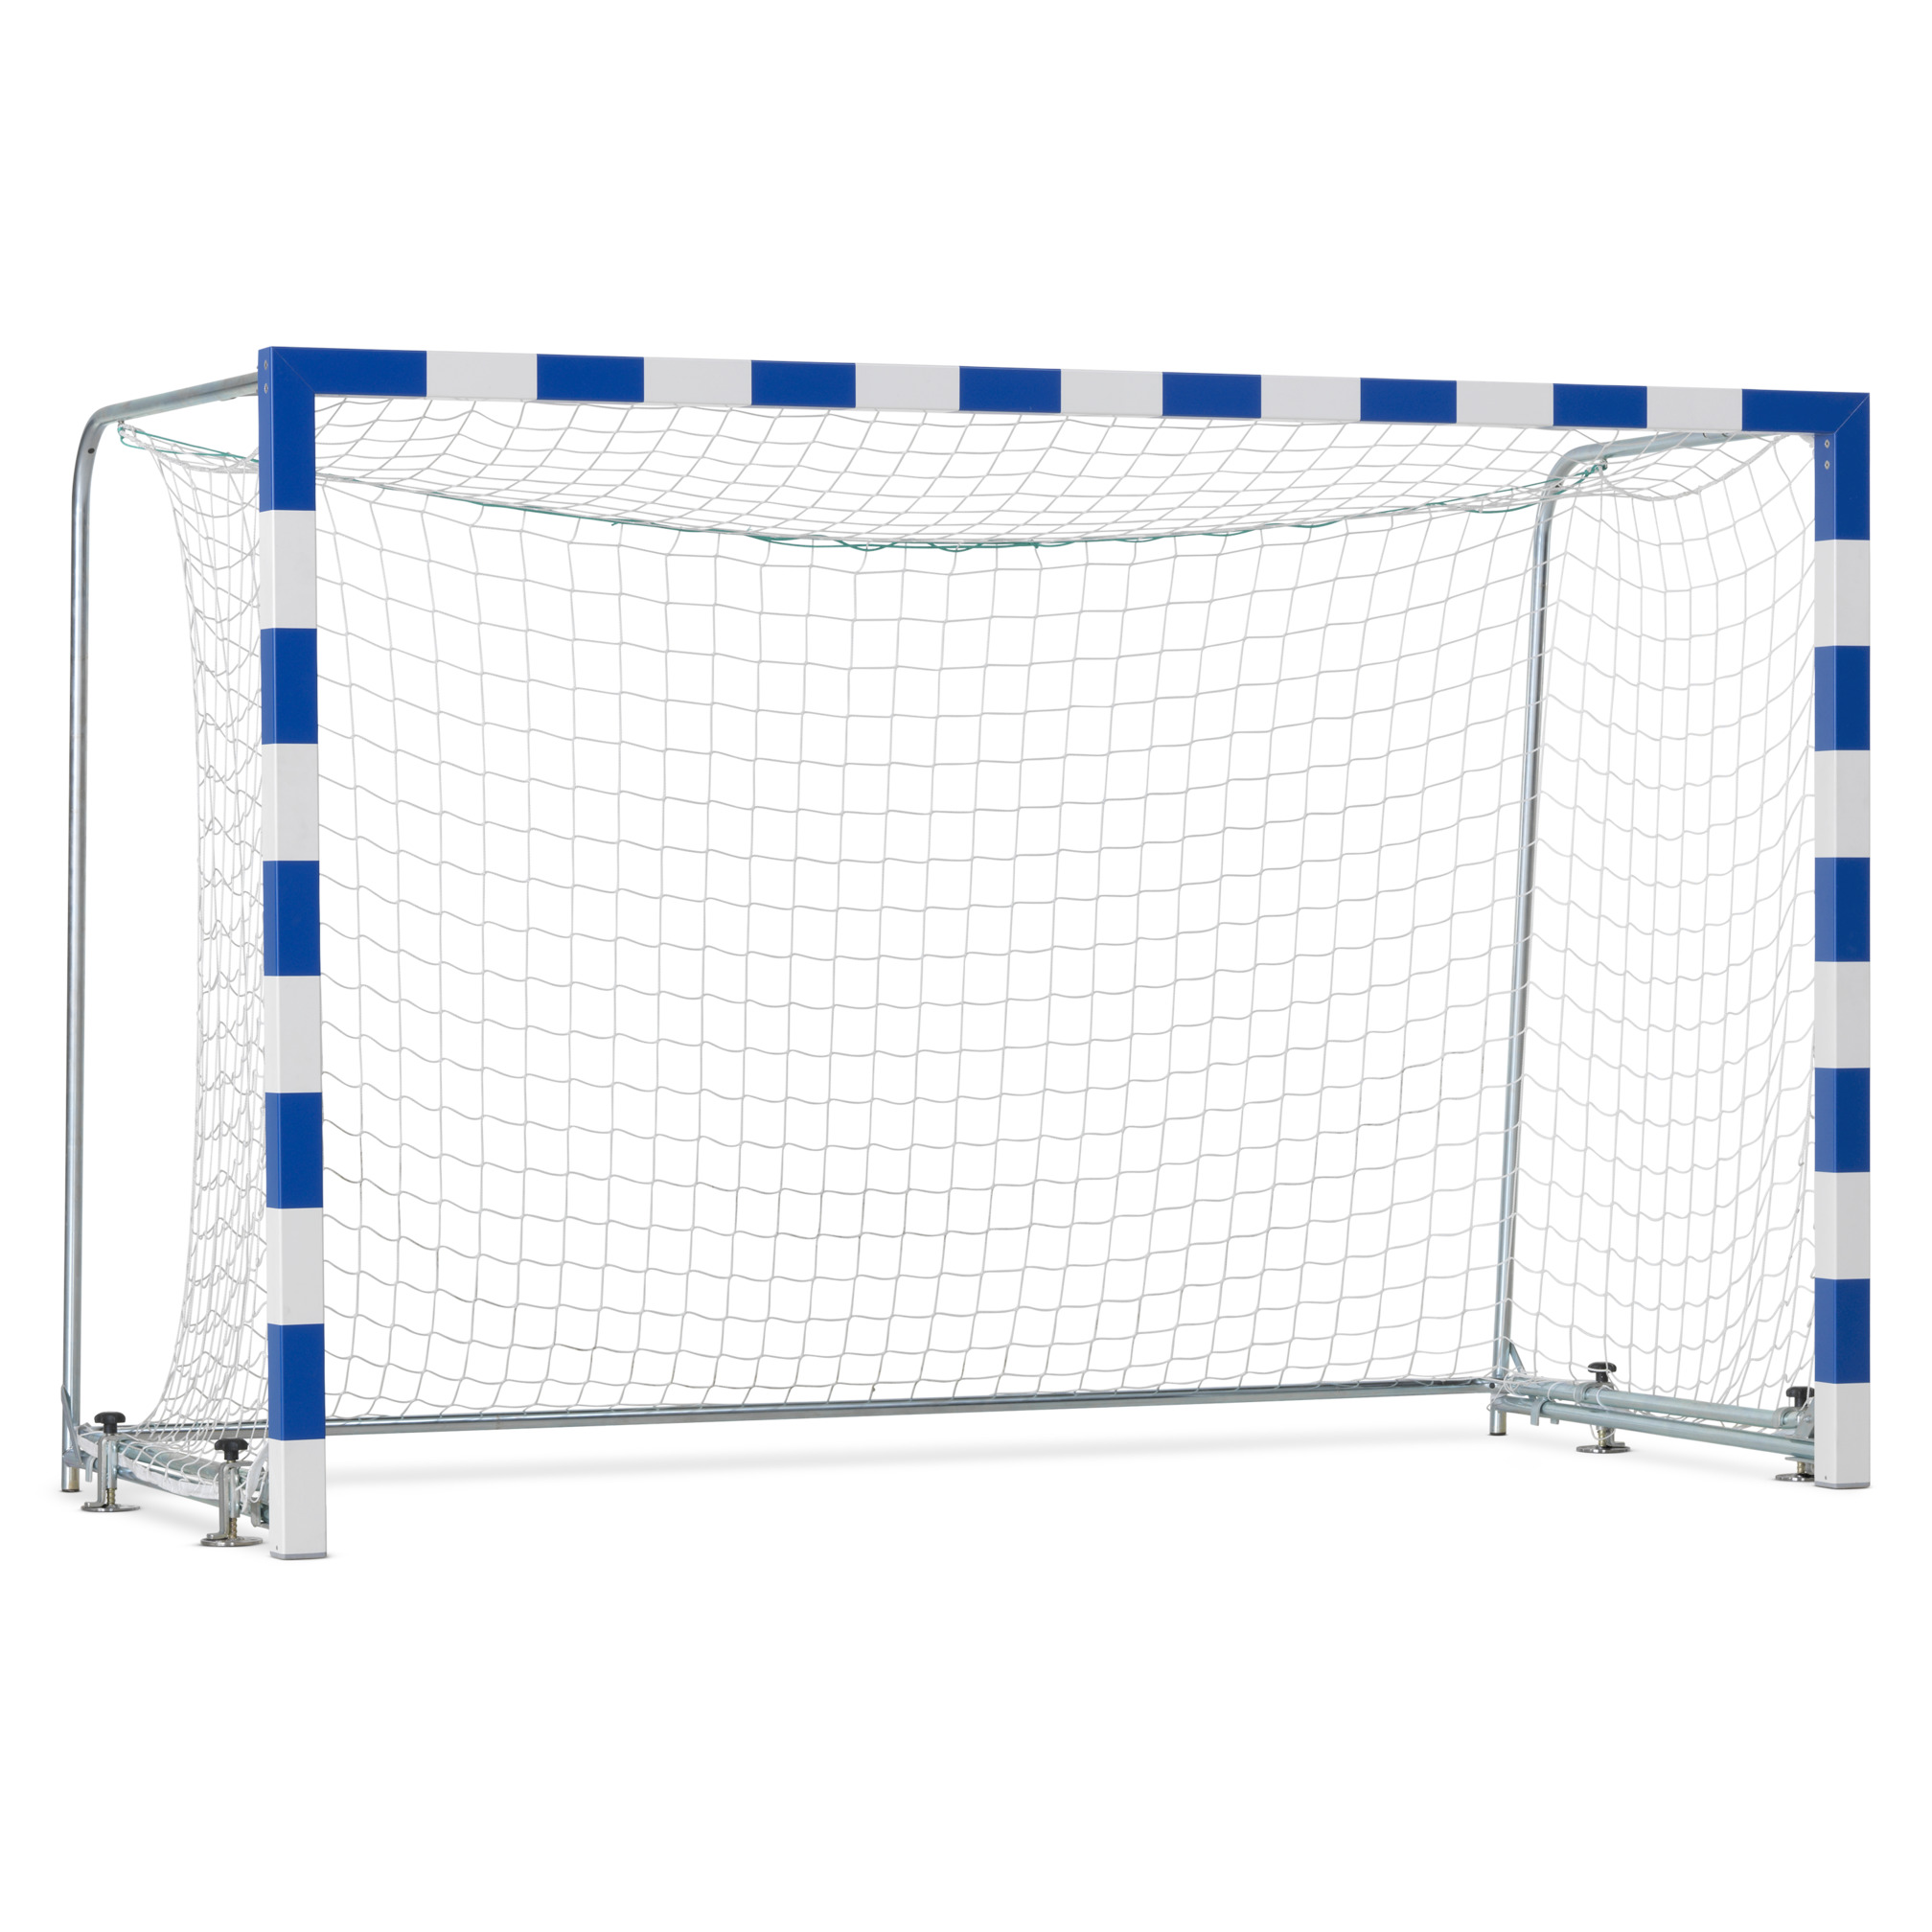 Handball goal IHF with collapsible bracket